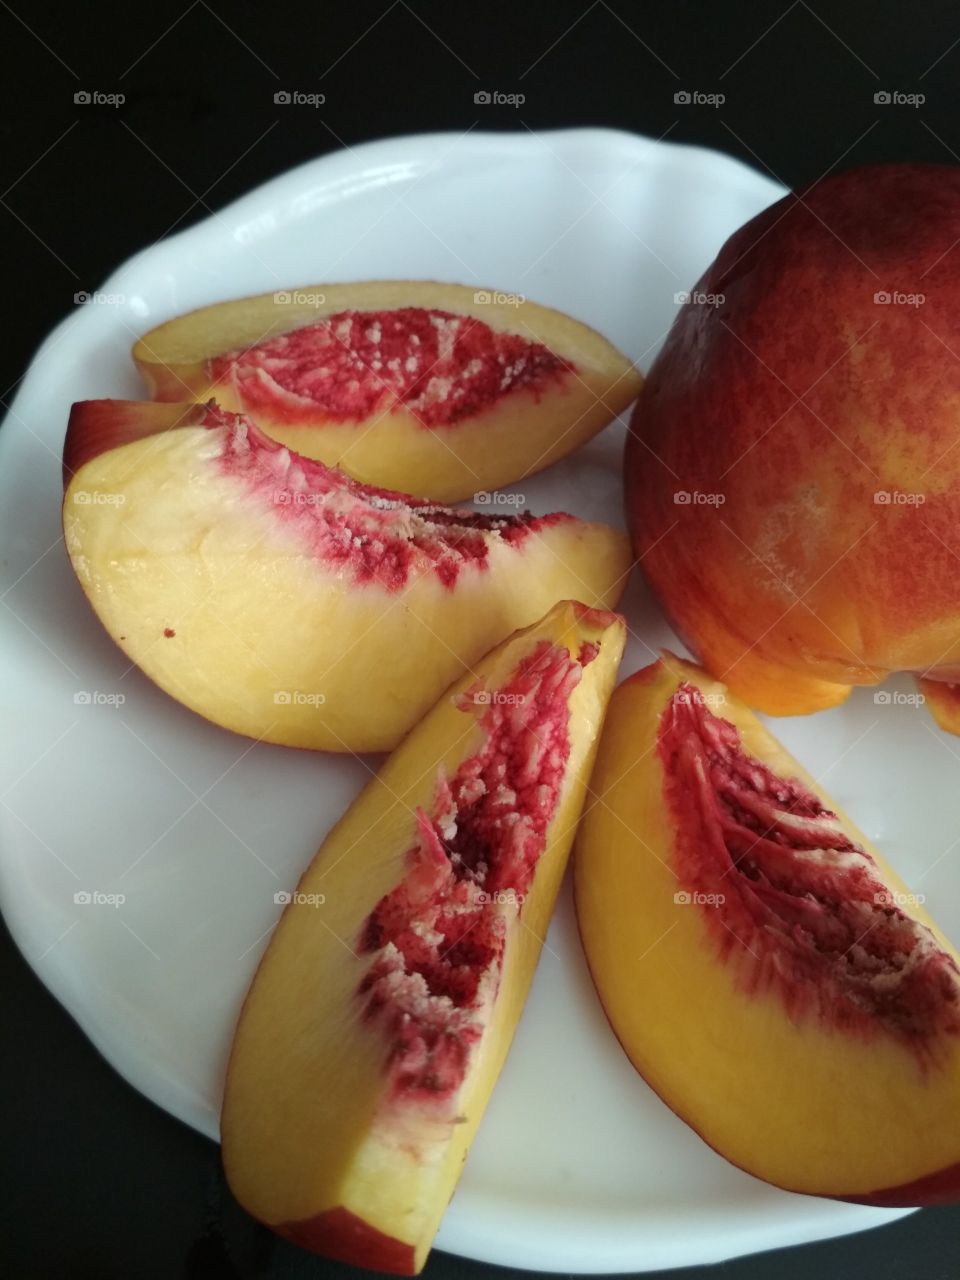 Nice fruits